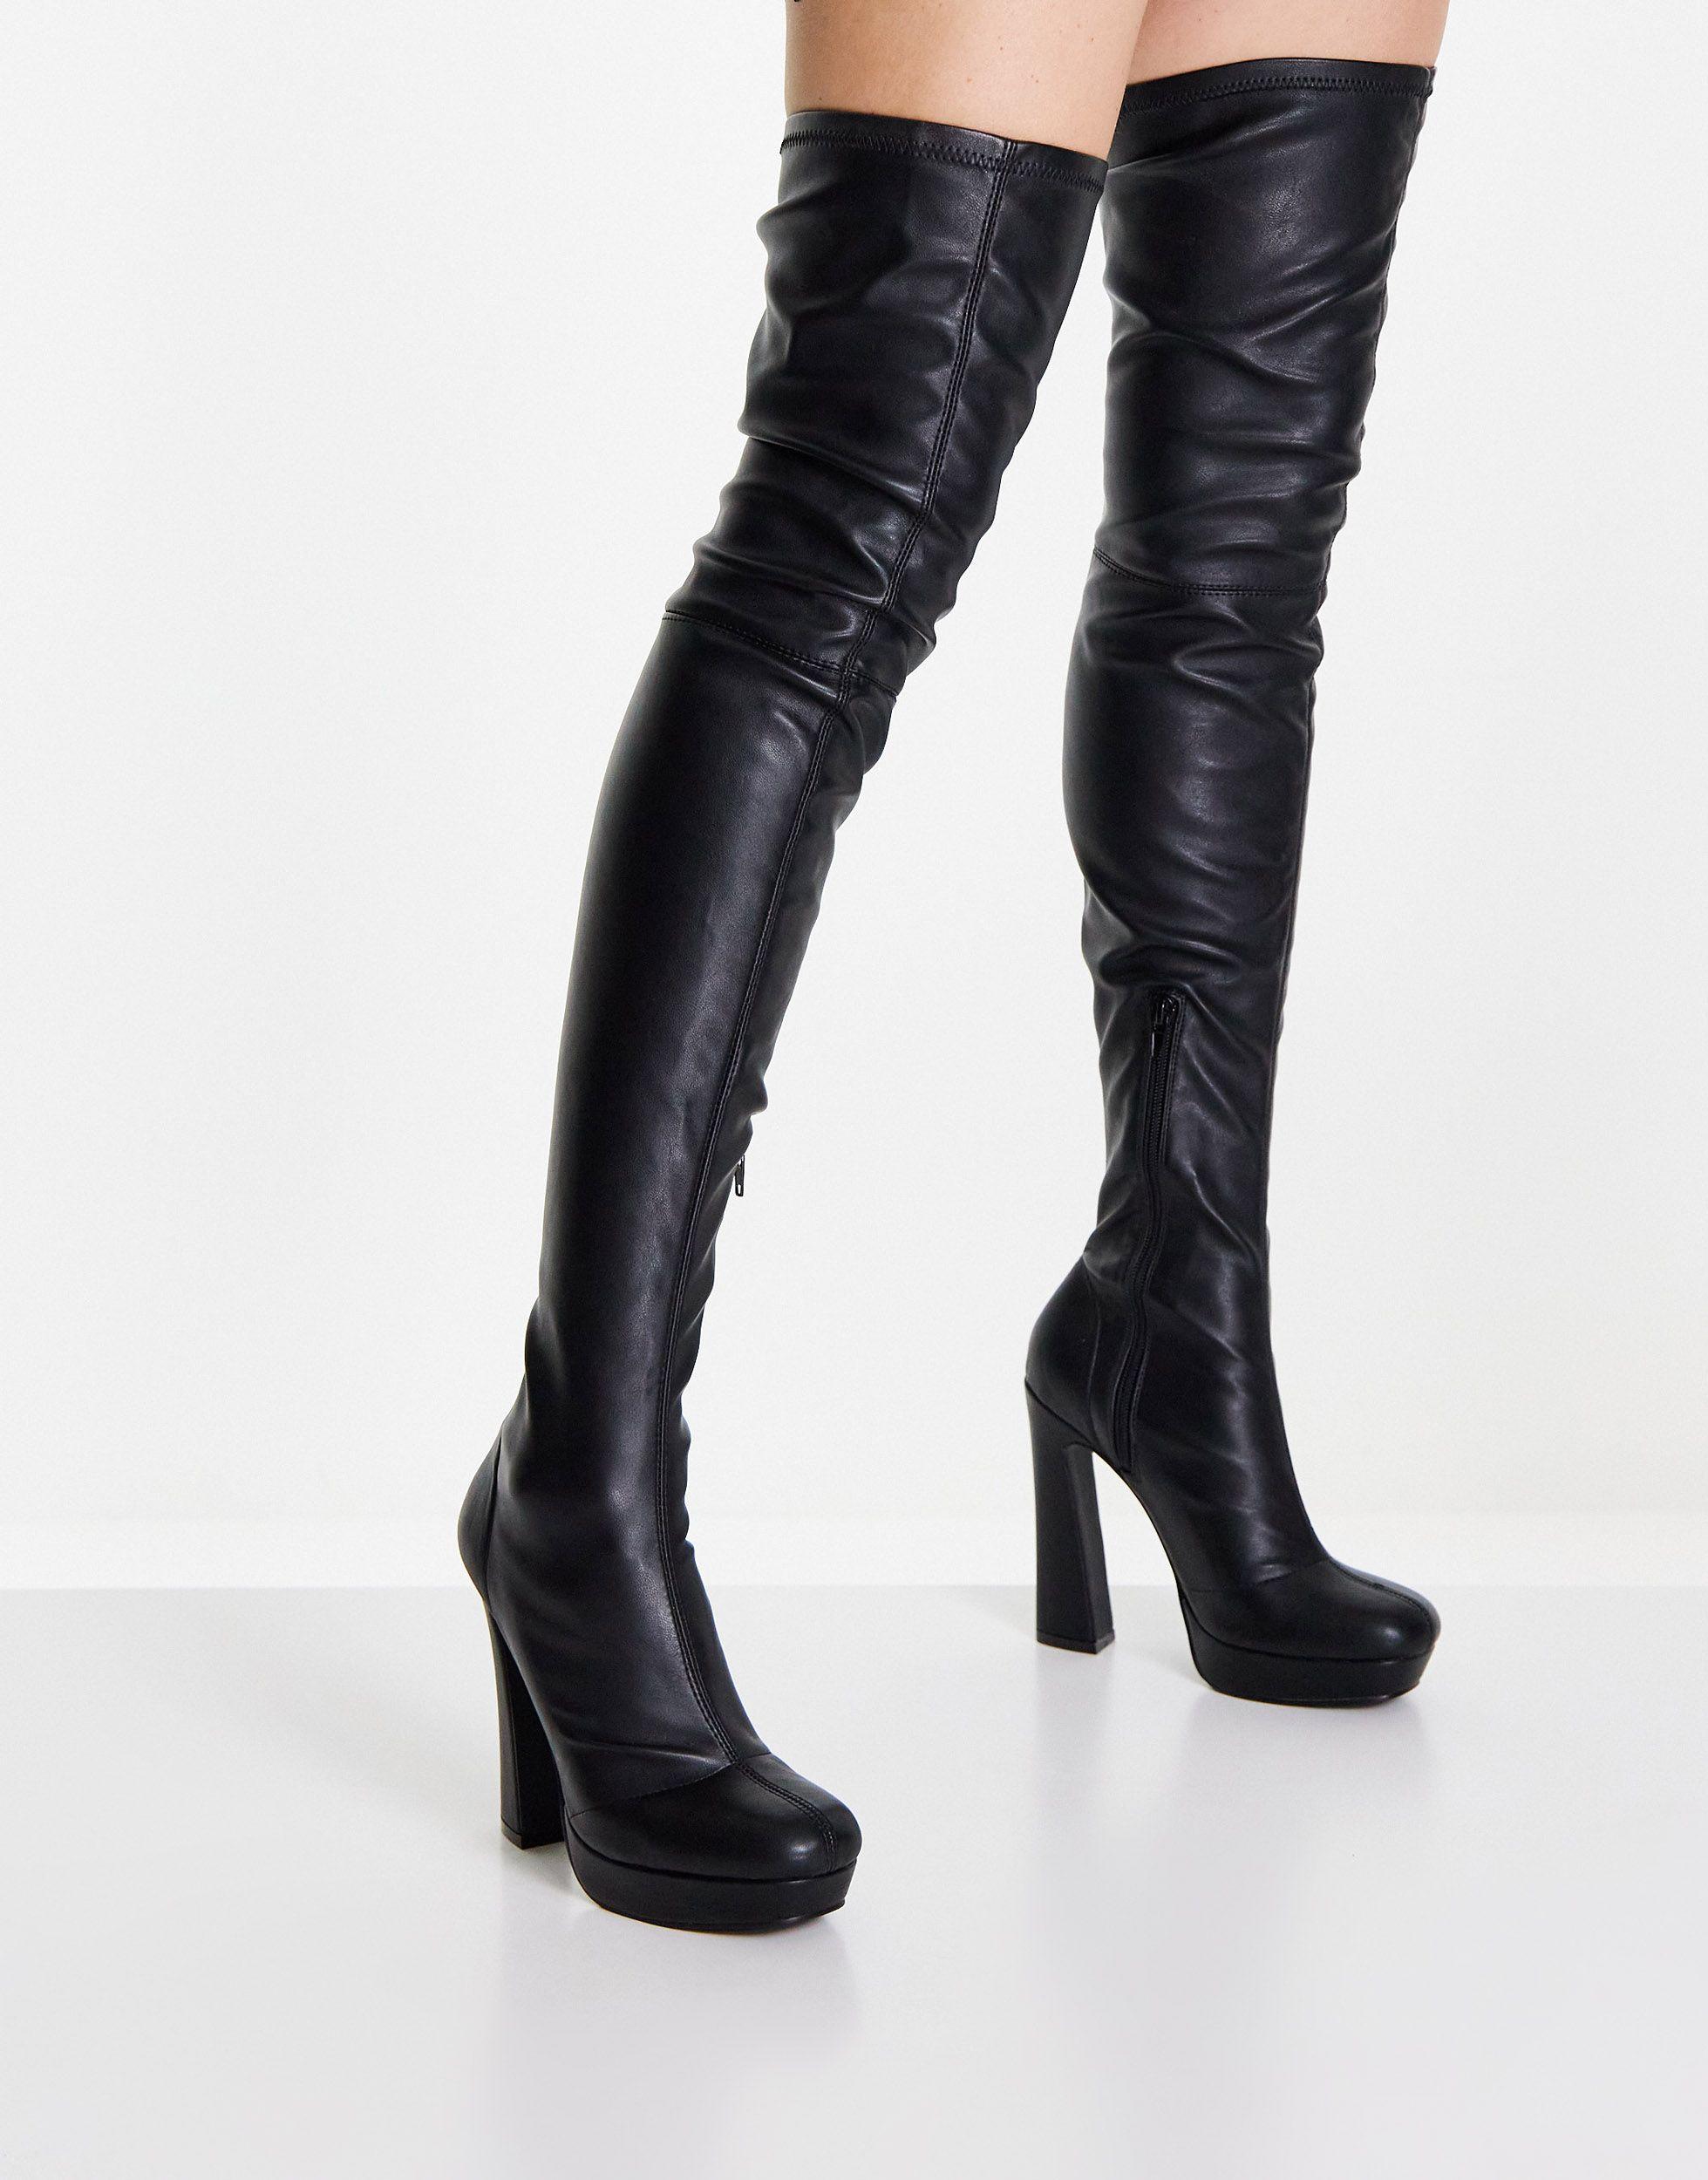 ASOS Kira High-heeled Platform Over The Knee Boots in Black | Lyst